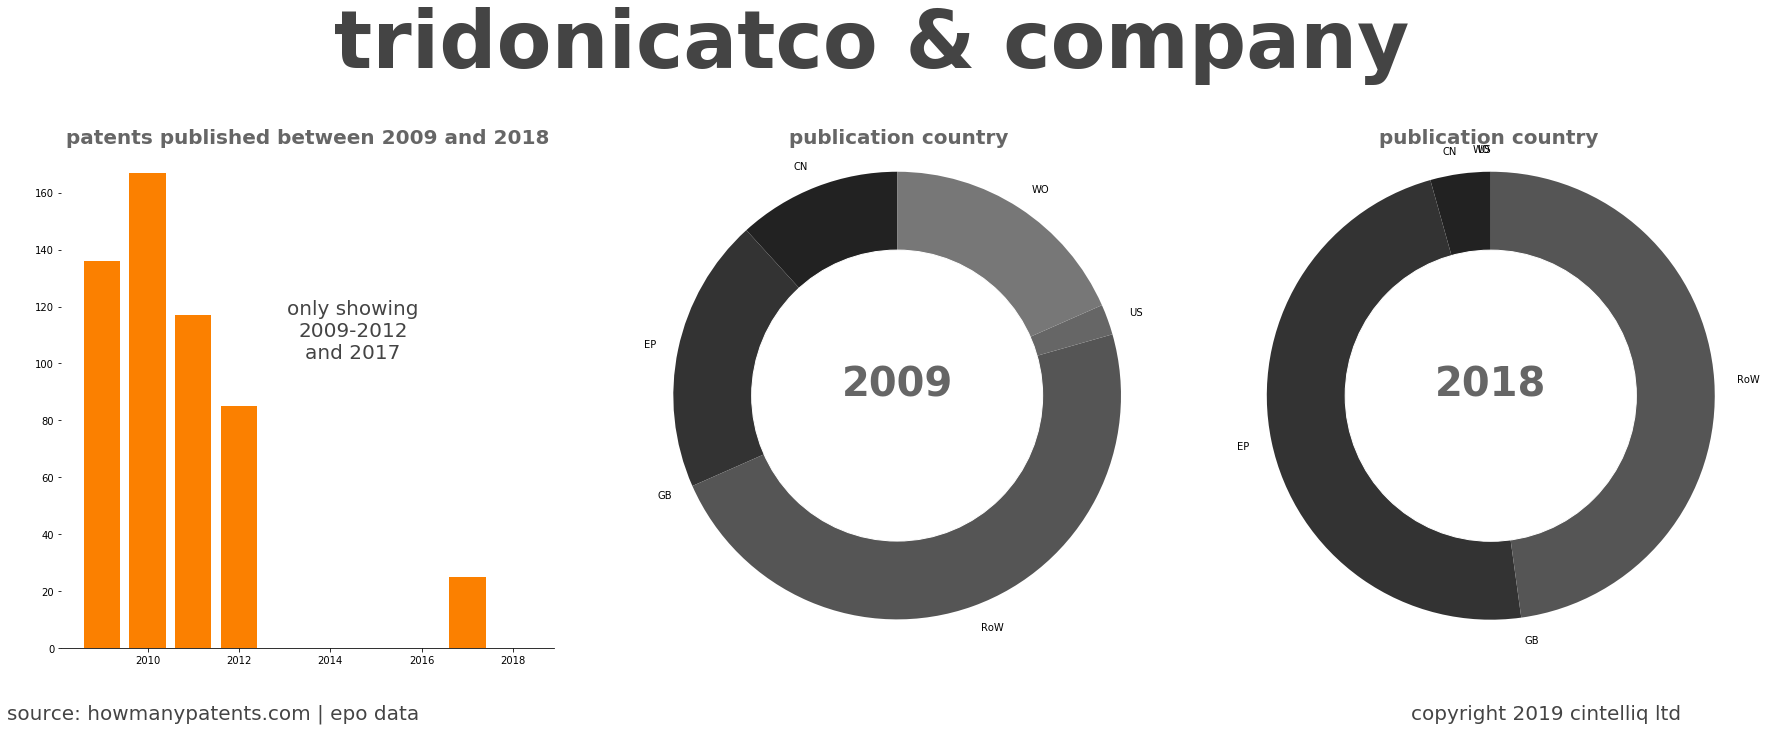 summary of patents for Tridonicatco & Company